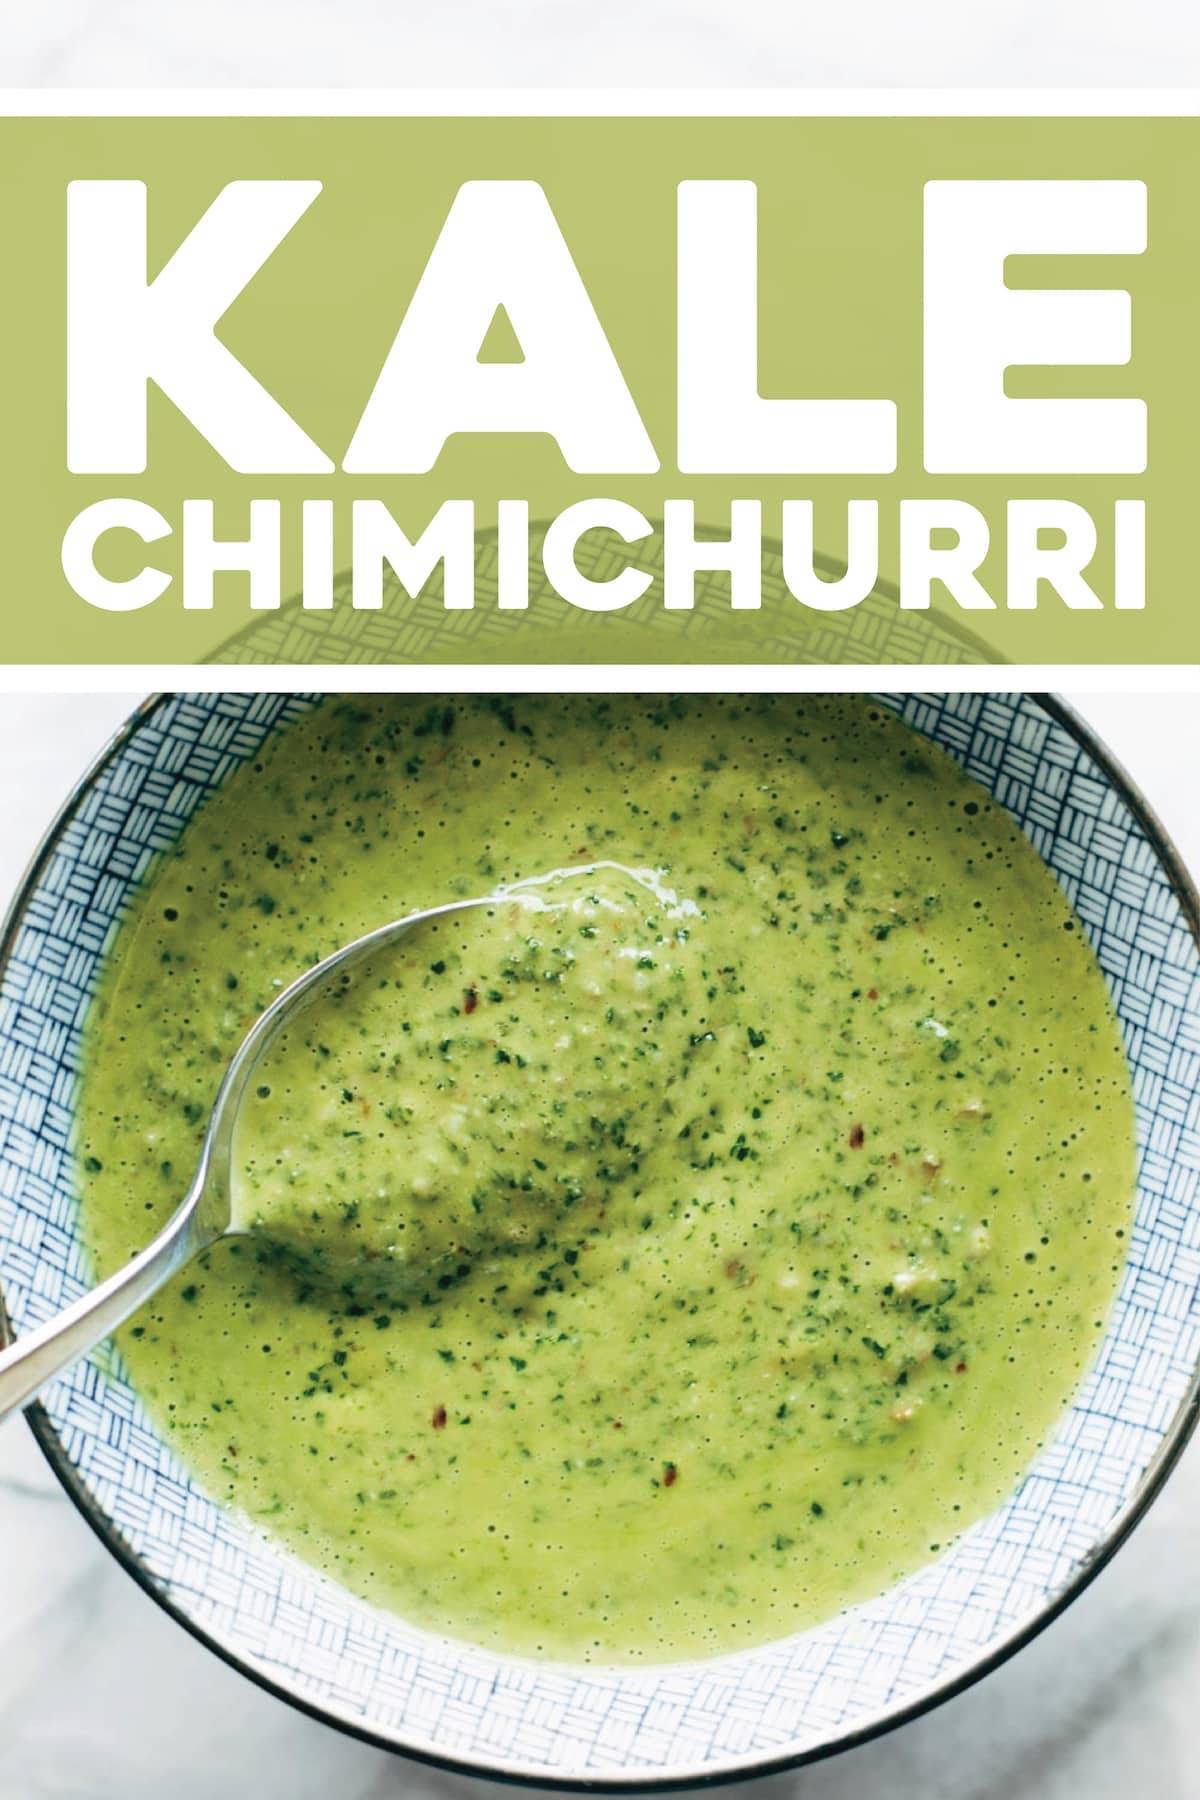 Kale Chimichurri Recipe - Pinch of Yum